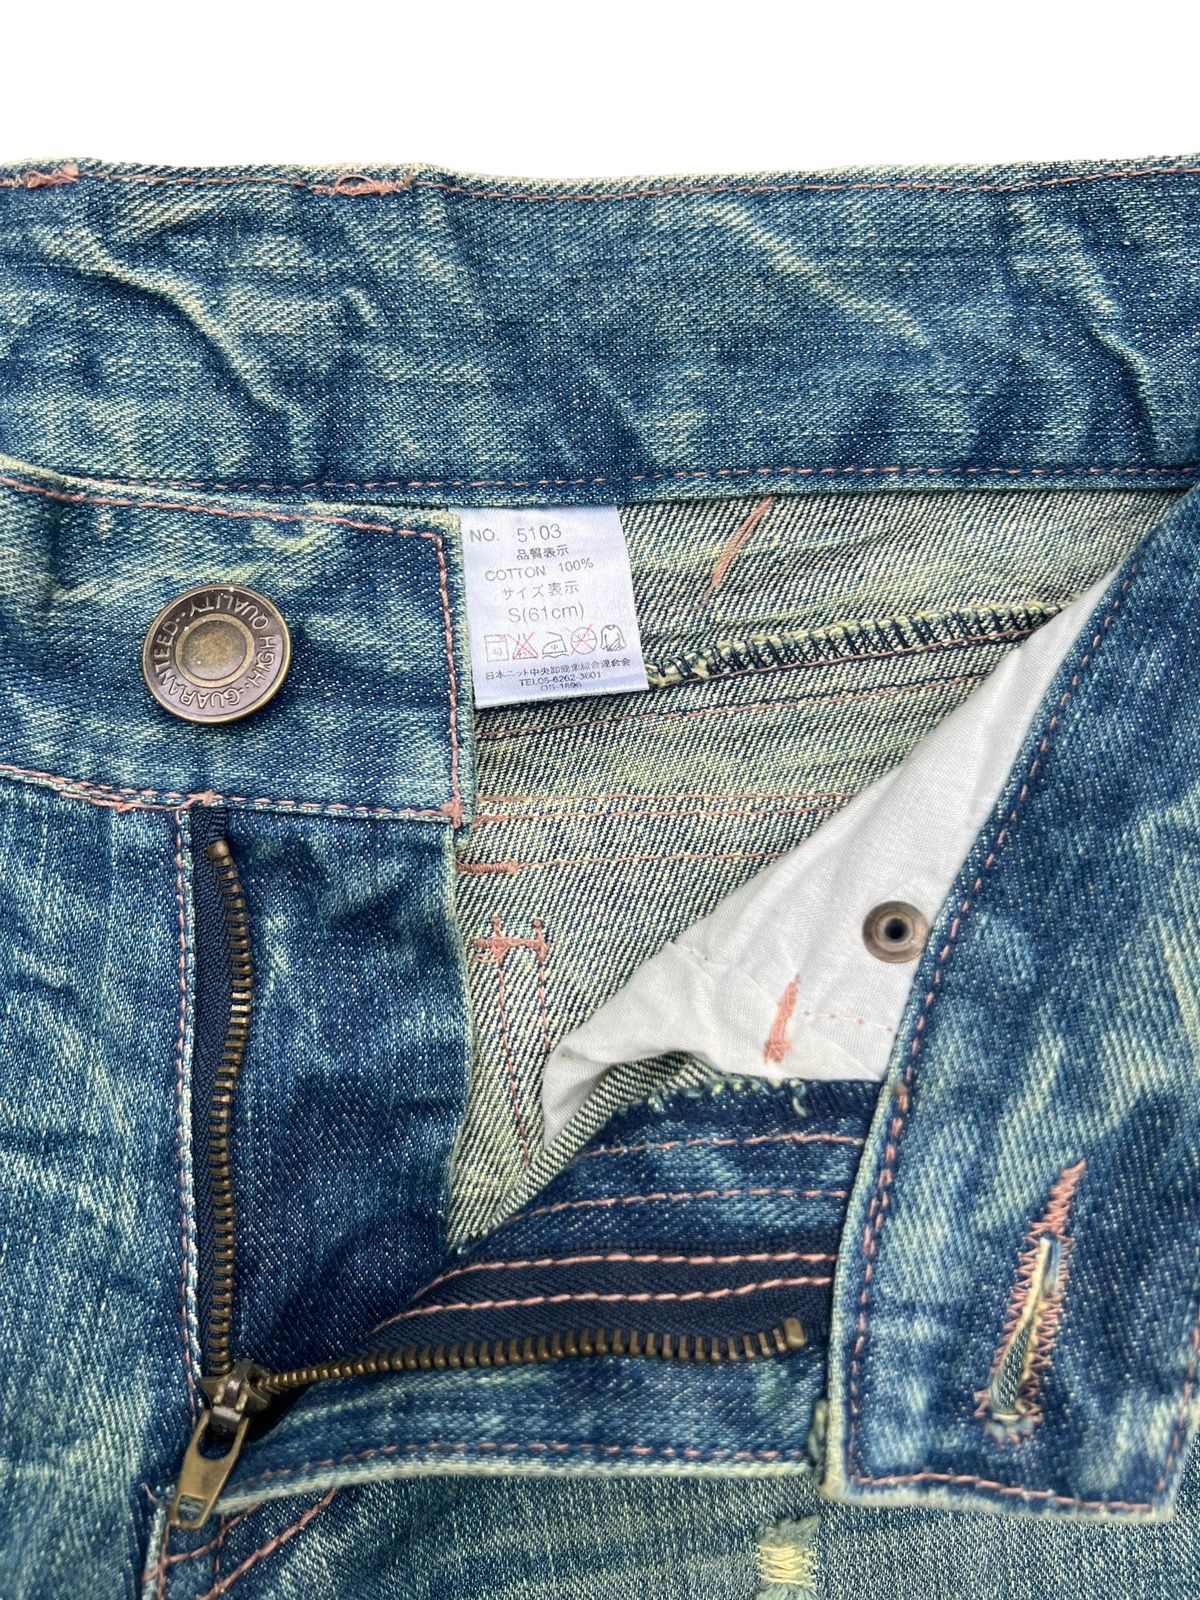 Hype - Japanese Brand Distressed Mudwash Flare Denim Jeans 28x30.5 - 8